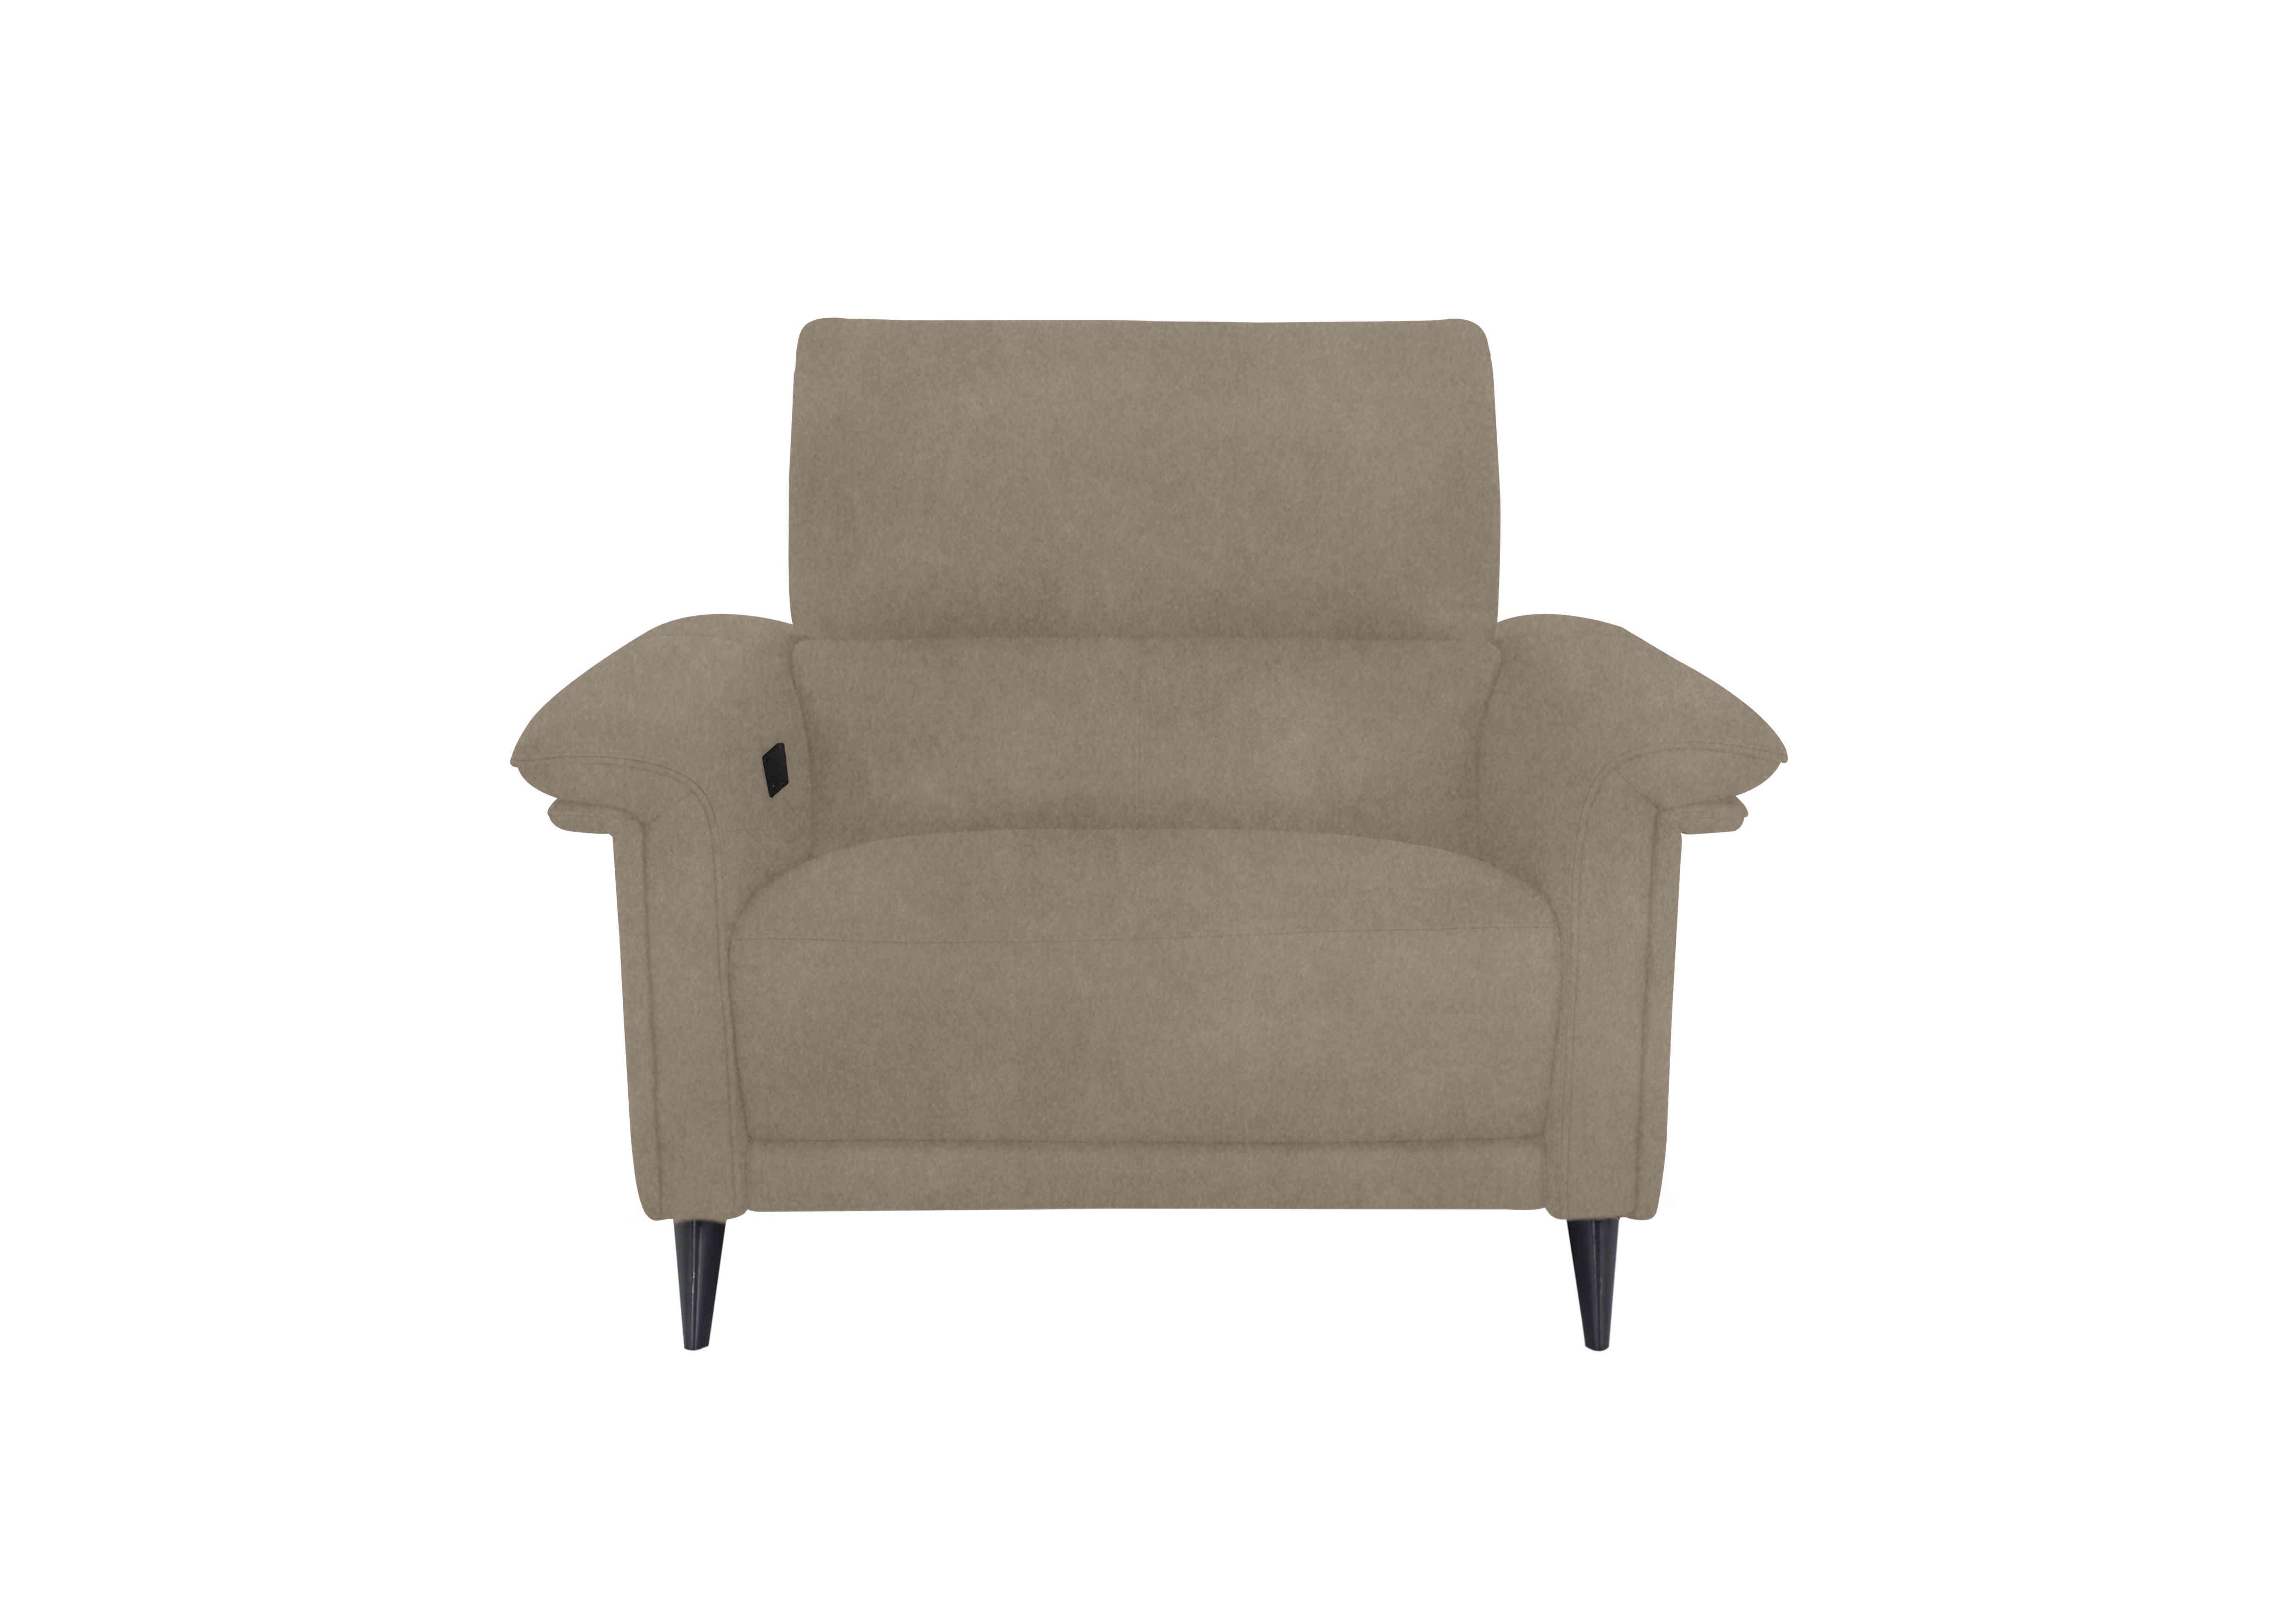 Huxley Fabric Chair in Fab-Meg-R32 Light Khaki on Furniture Village